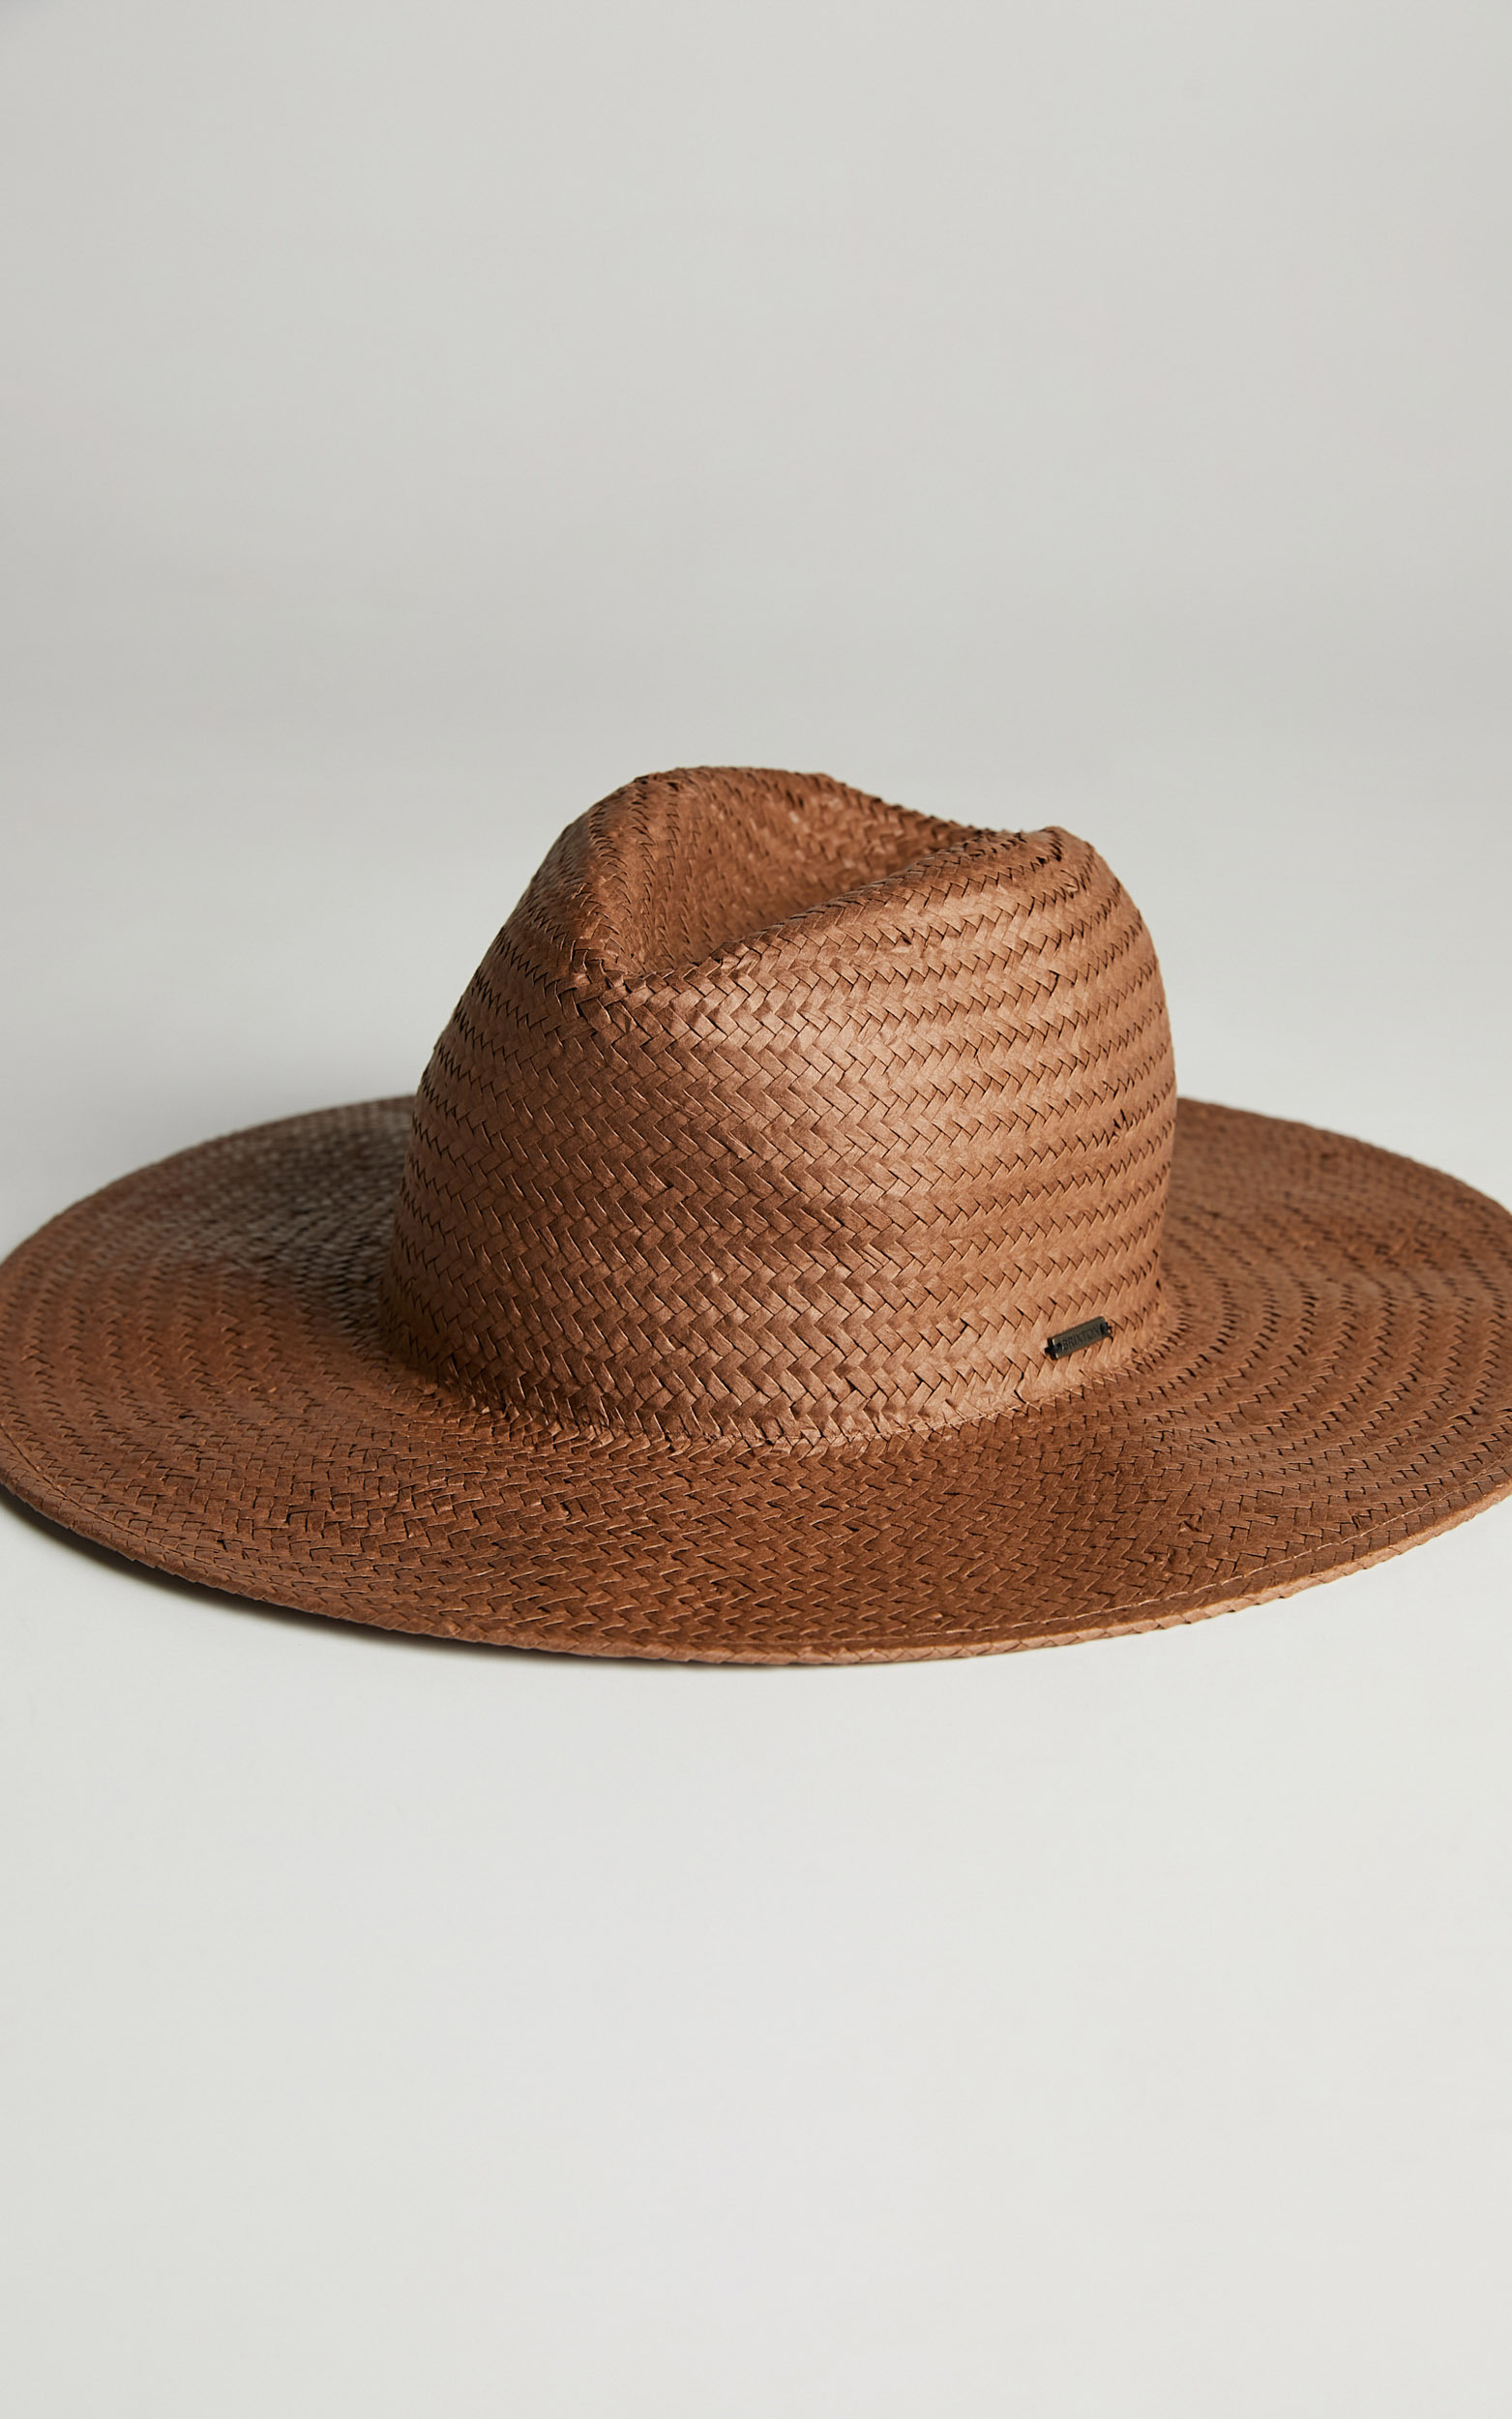 Brixton - Seaside Sun Hat in Brown - M/L, BRN1, hi-res image number null